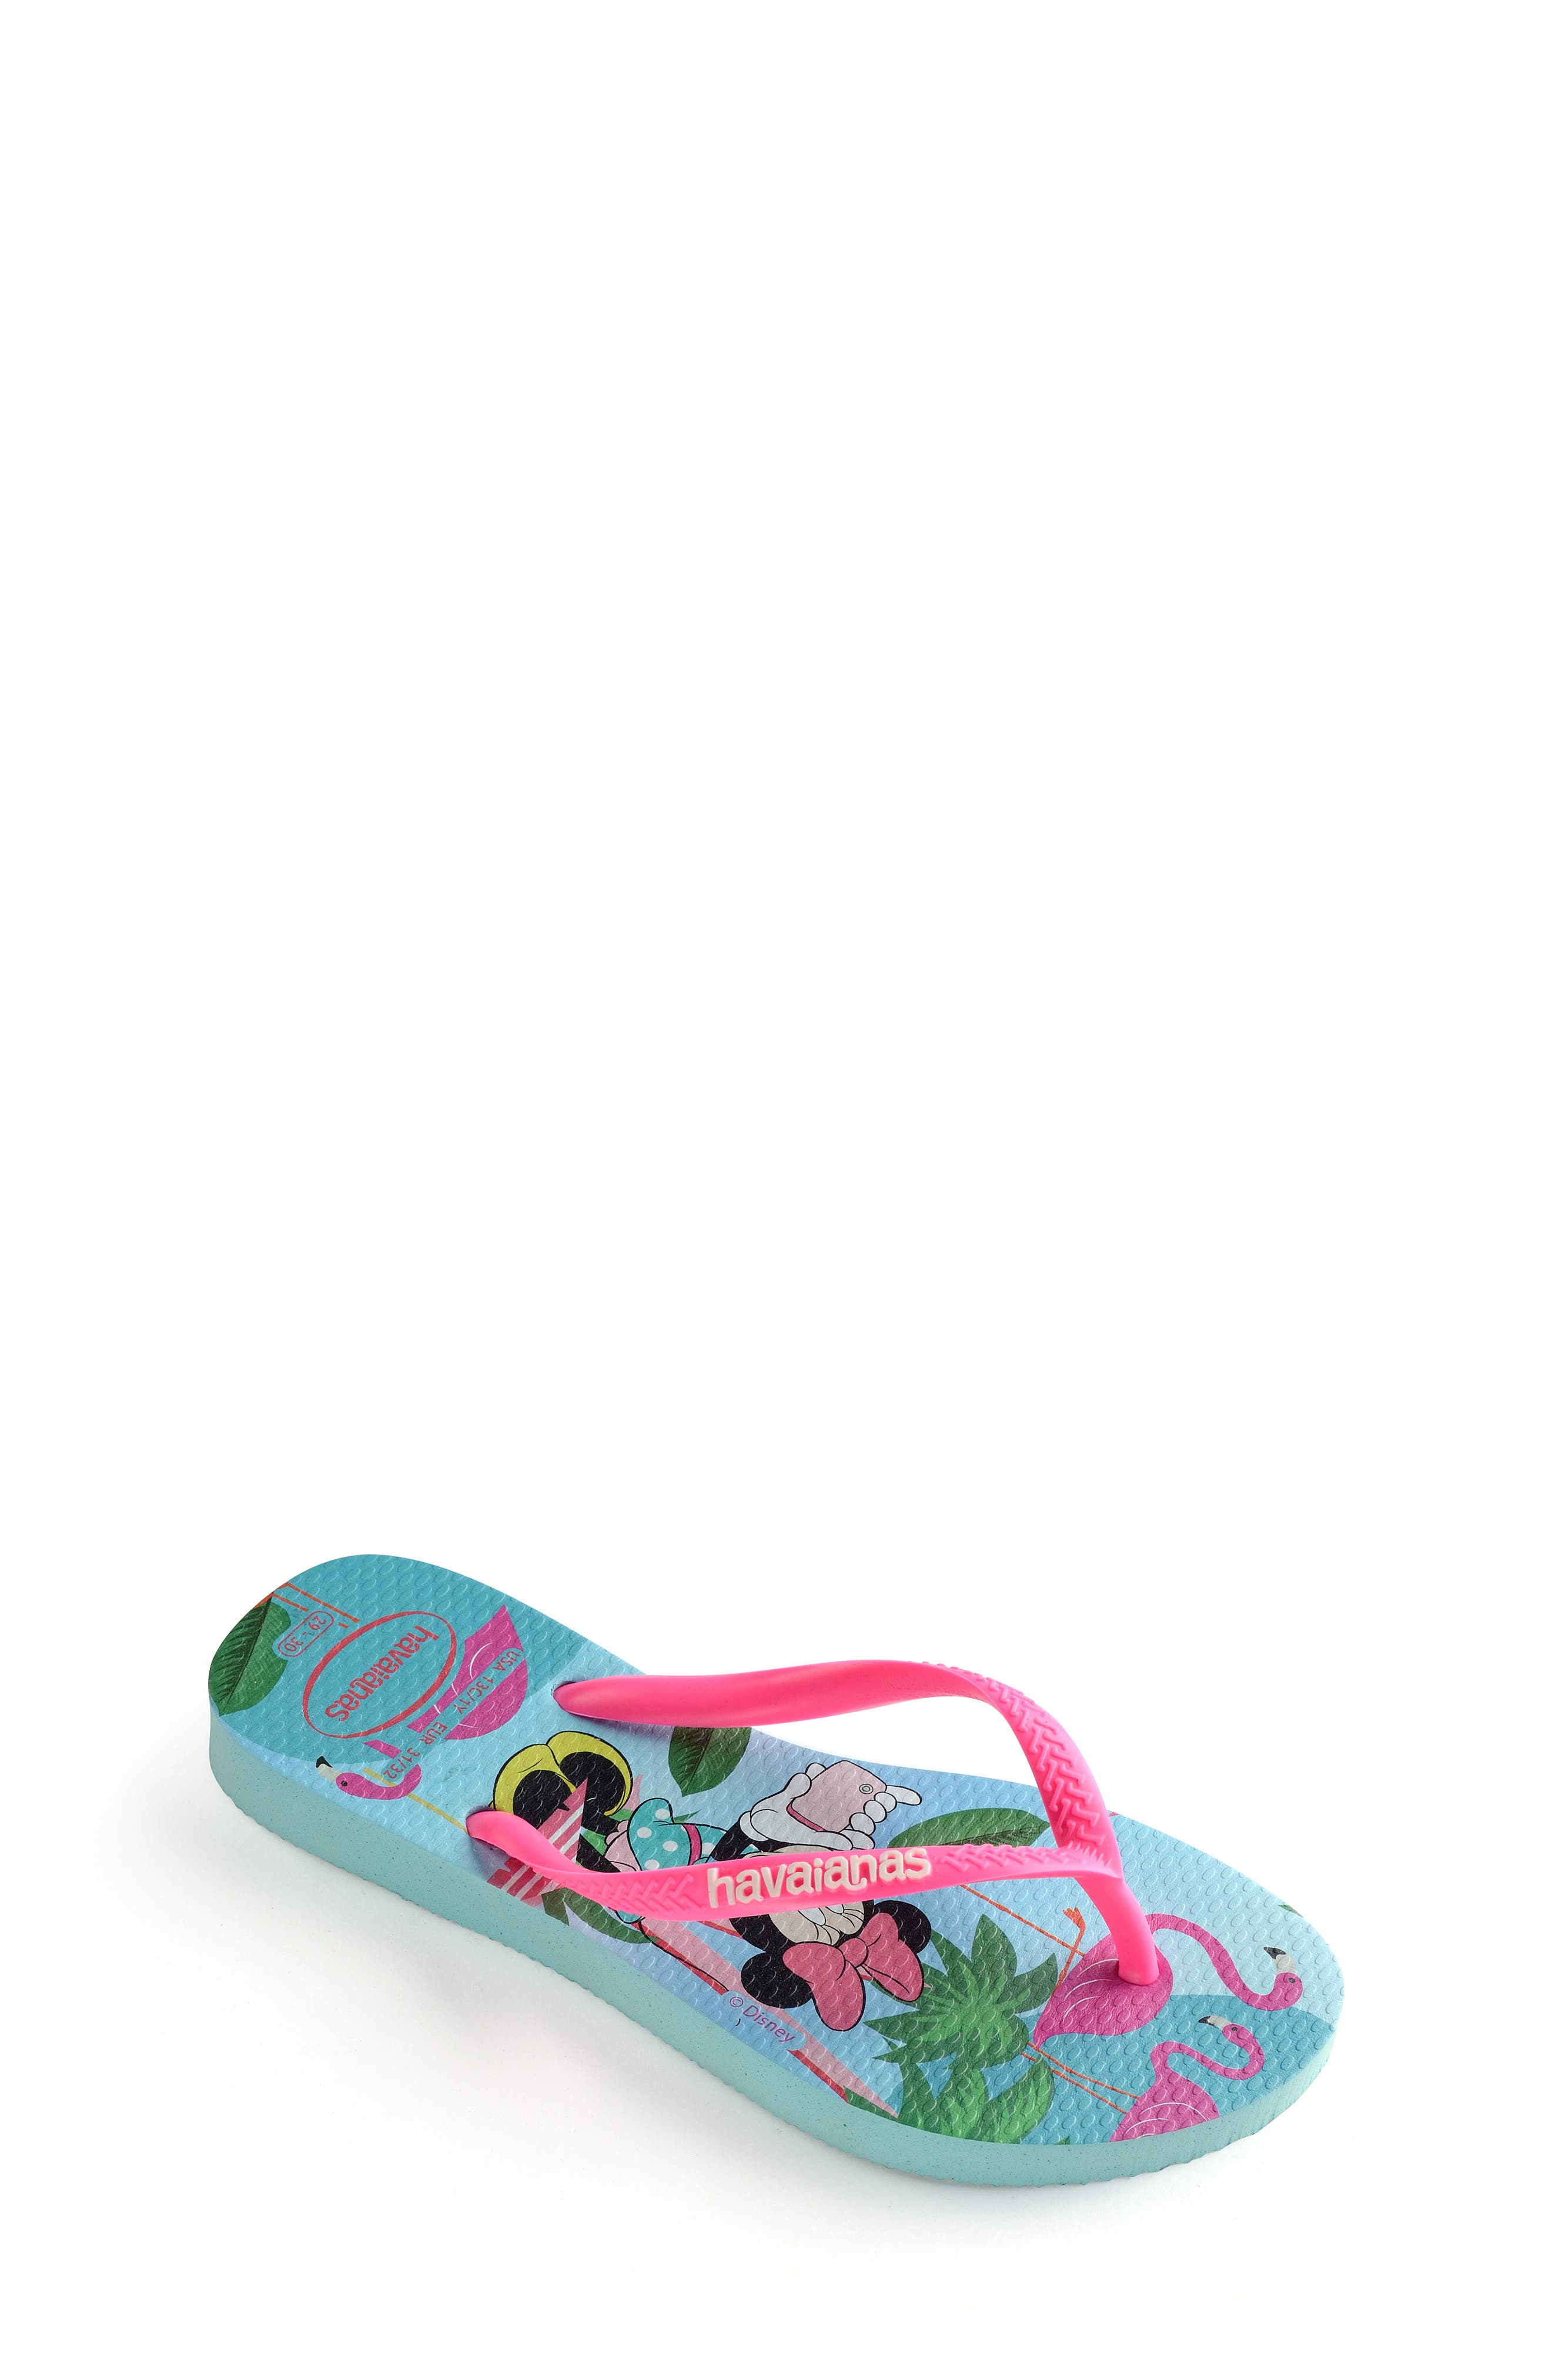 Havaianas Girls Top Disney Ice Blue Minnie Mouse Flip Flops Summer Shoes 